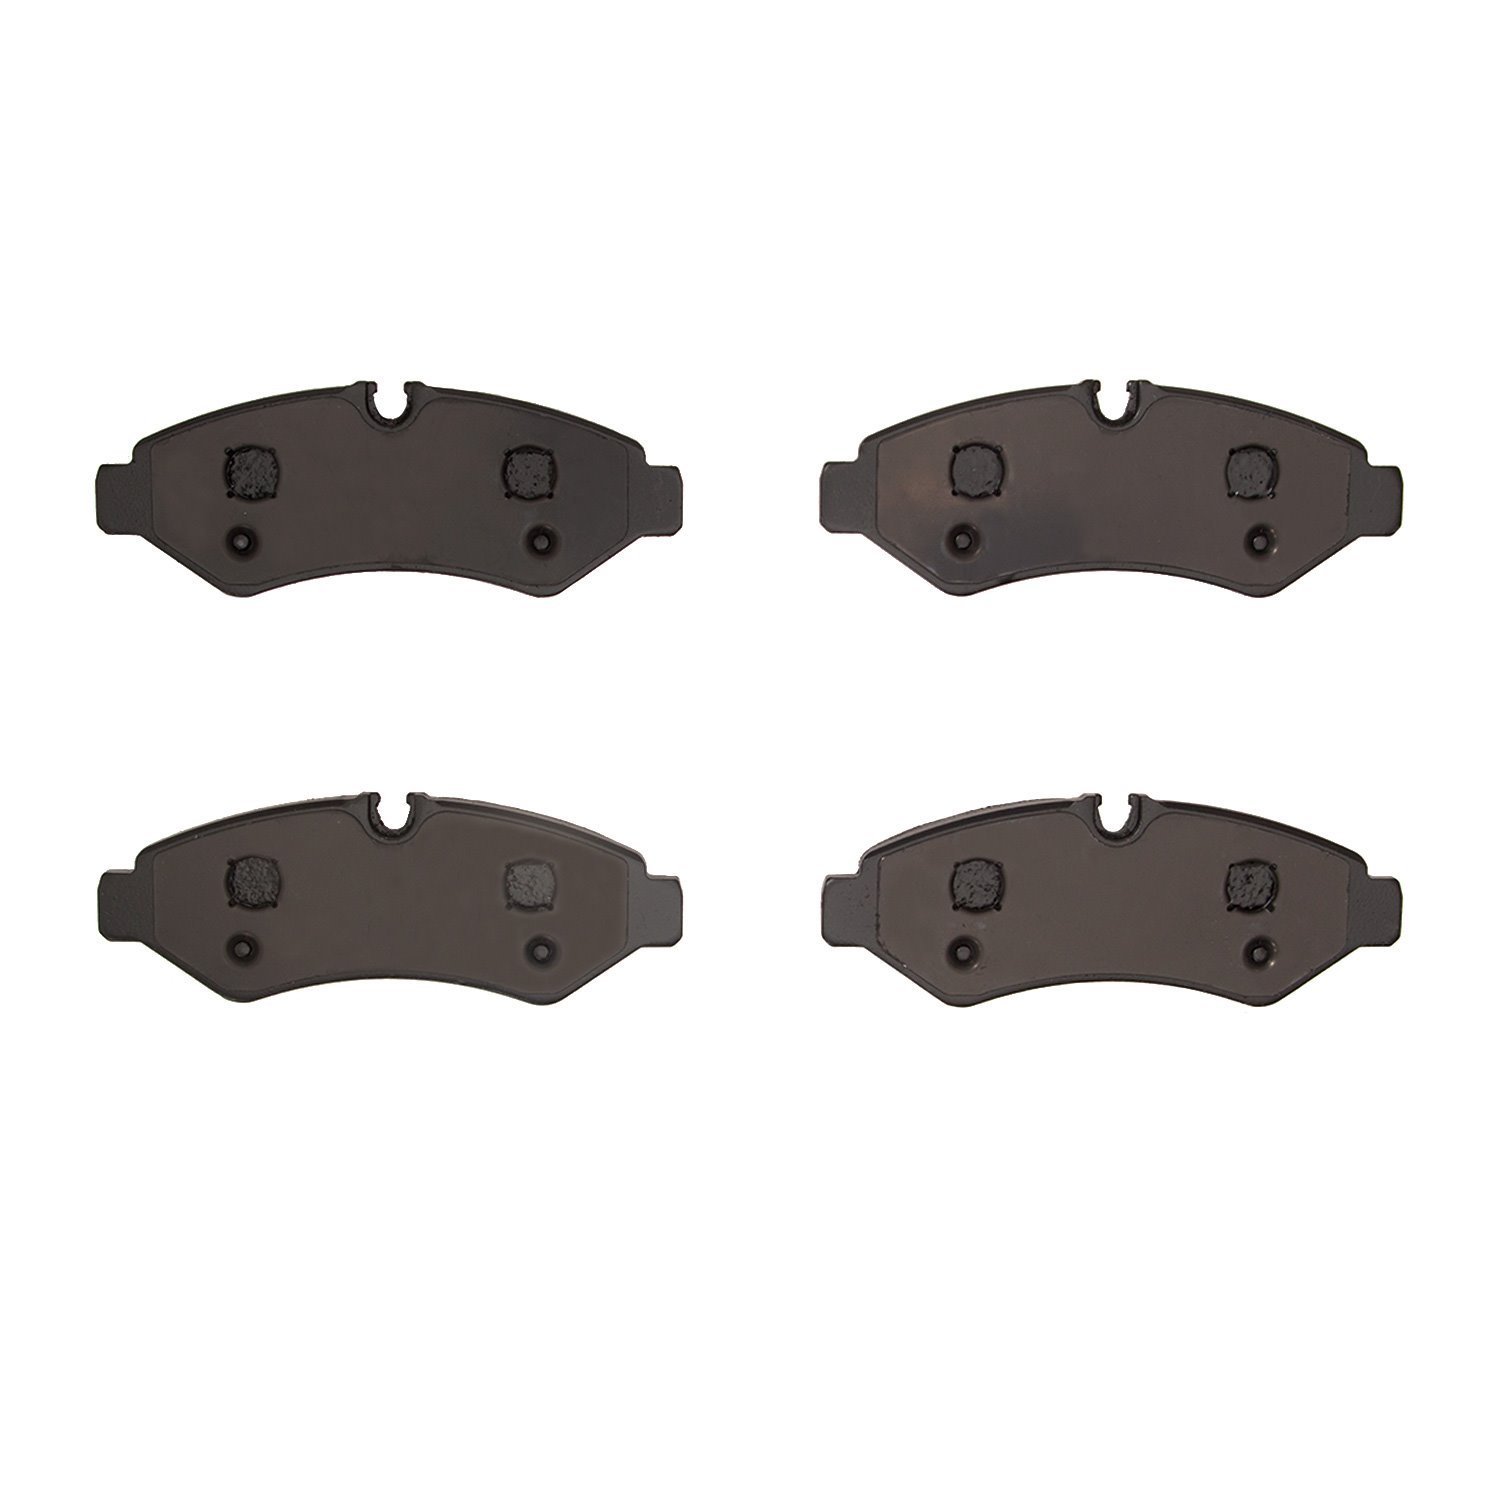 1551-2201-00 5000 Advanced Semi-Metallic Brake Pads, Fits Select Multiple Makes/Models, Position: Rear,Rr